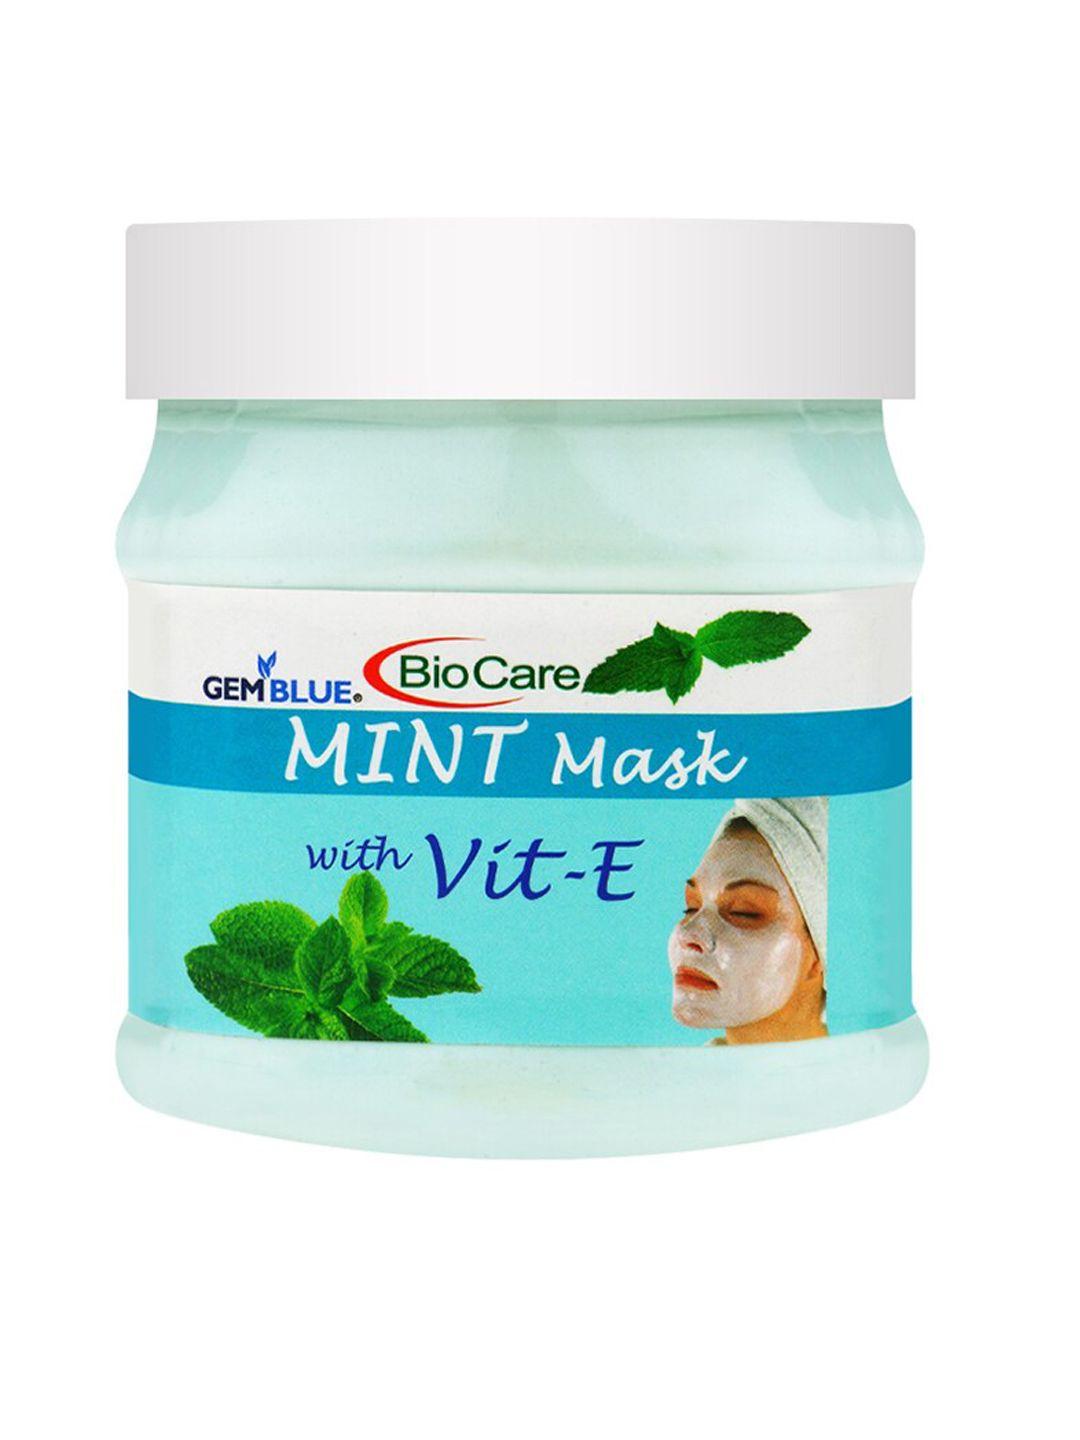 gemblue biocare mint mask with vitamine e 500ml